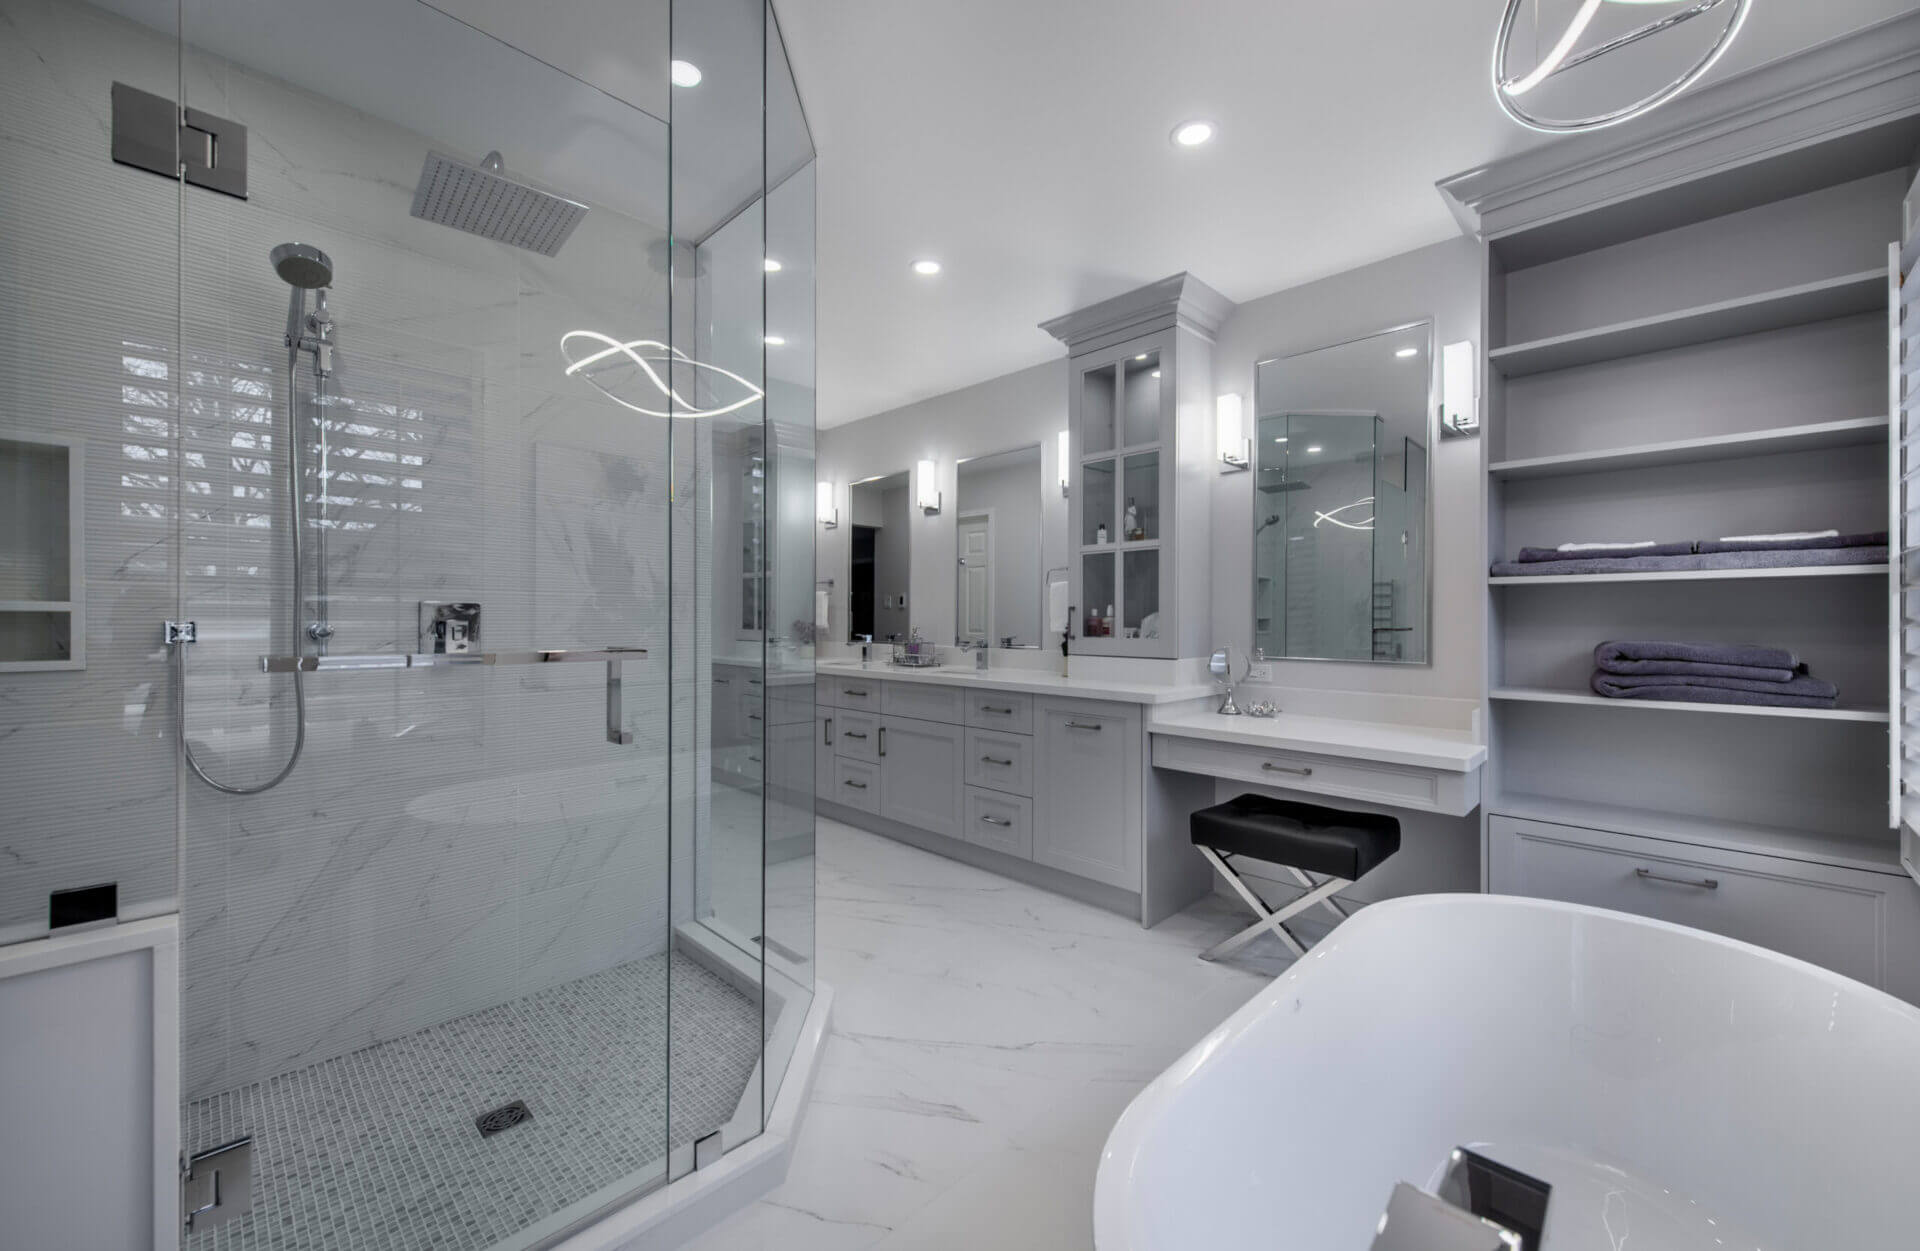 Bathroom Remodeling and Design Services in Kensington Maryland